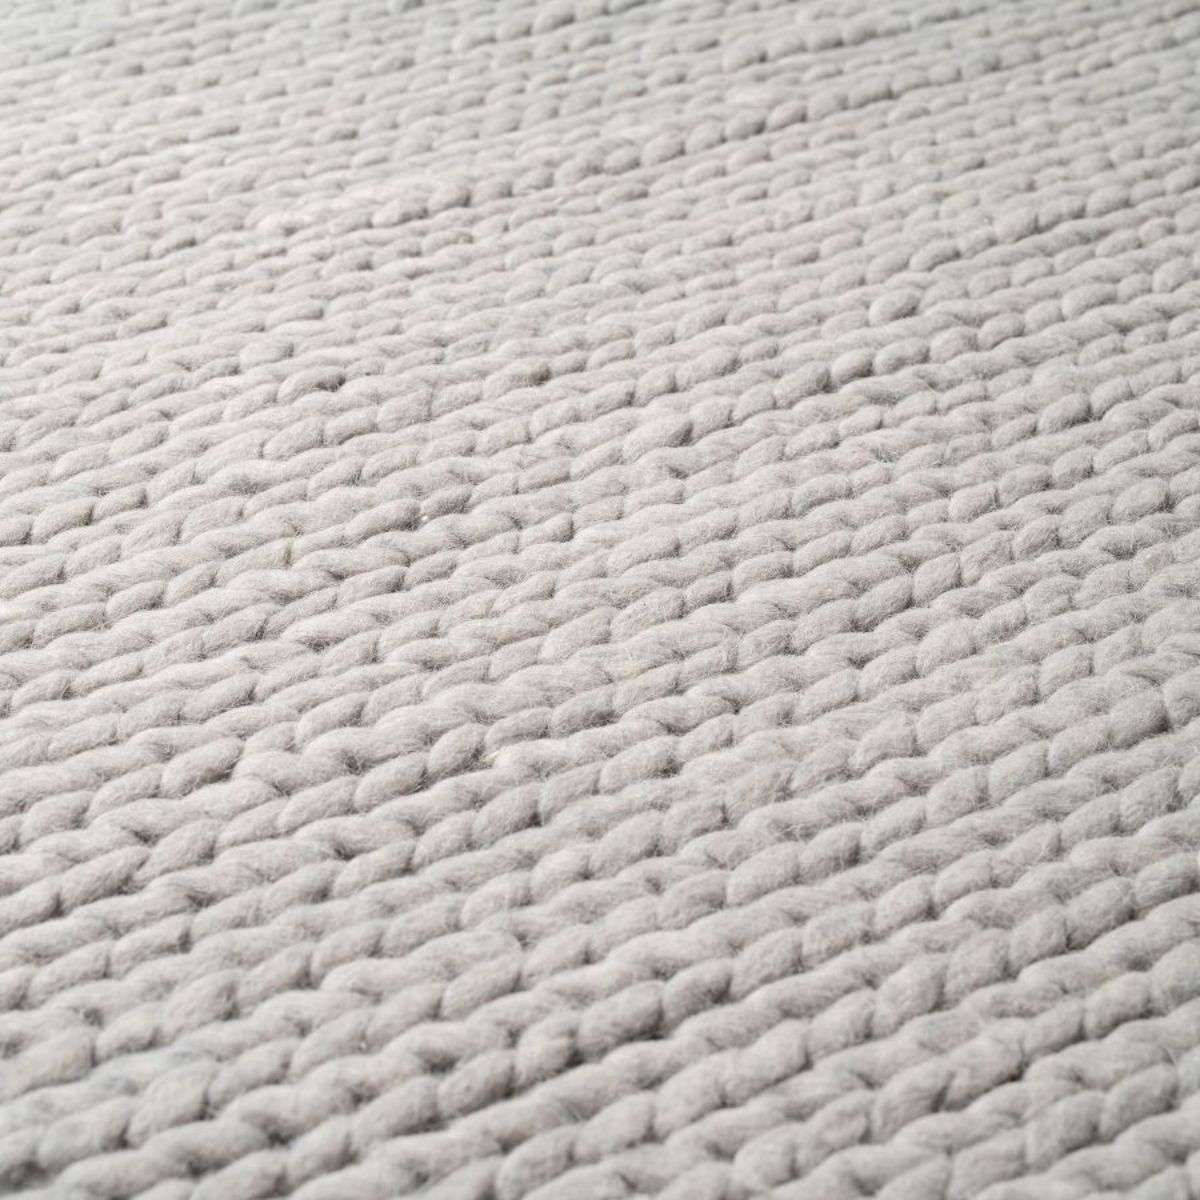 Charlotte Braided Wool Blend Rug - Large - Grey